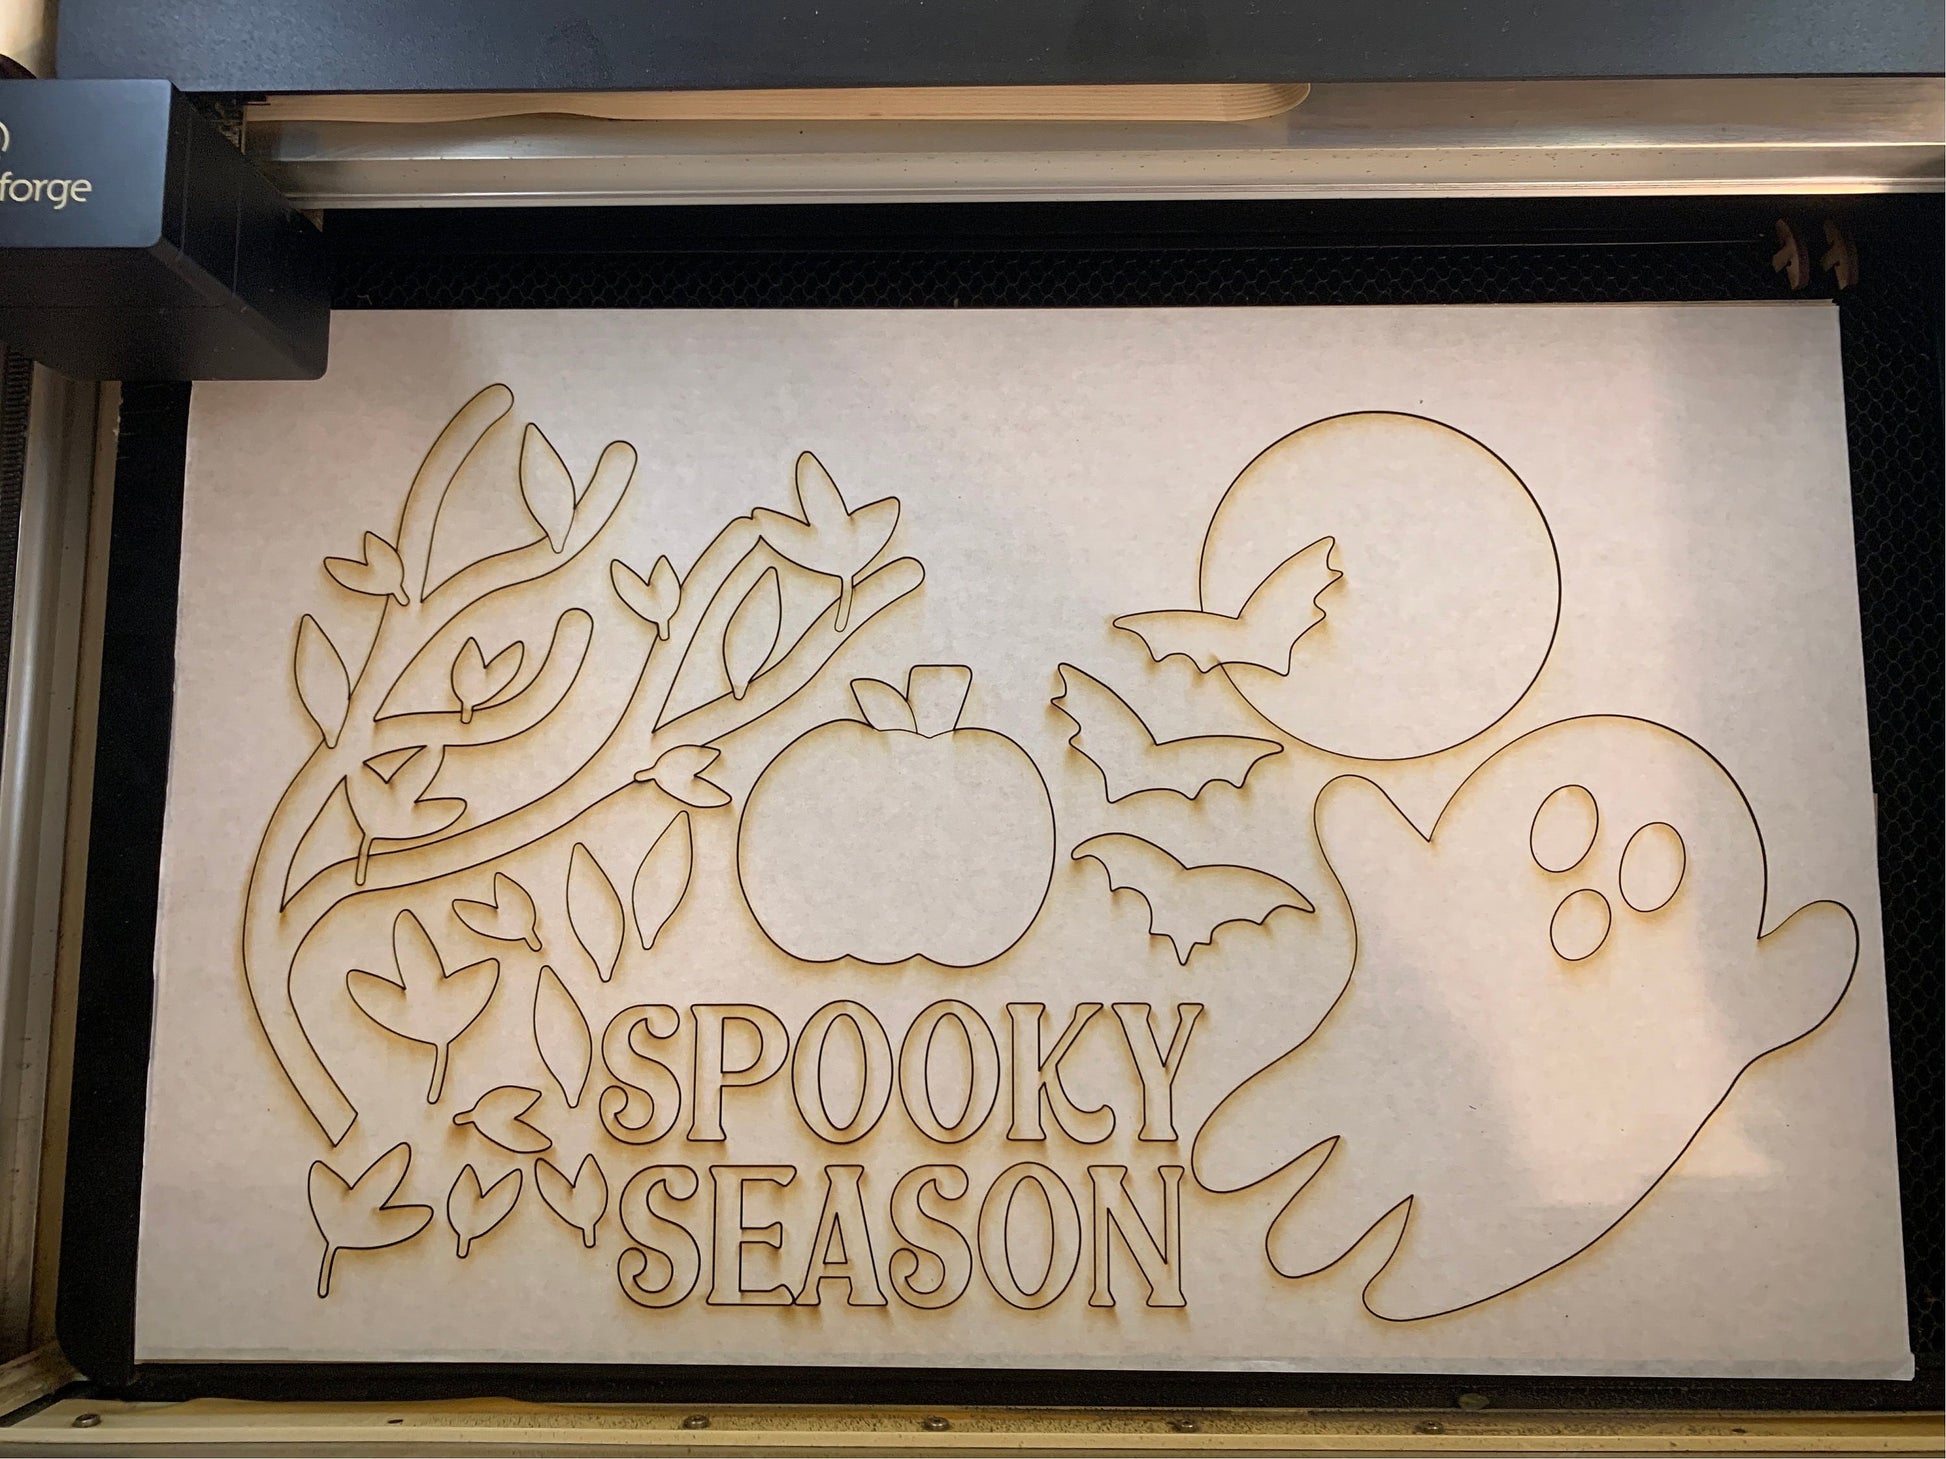 Spooky Season Ghost Halloween Door Hanger Round - Seasonal Sign Making and DIY Kits - Cut File For Glowforge Lasers - Digital SVG File